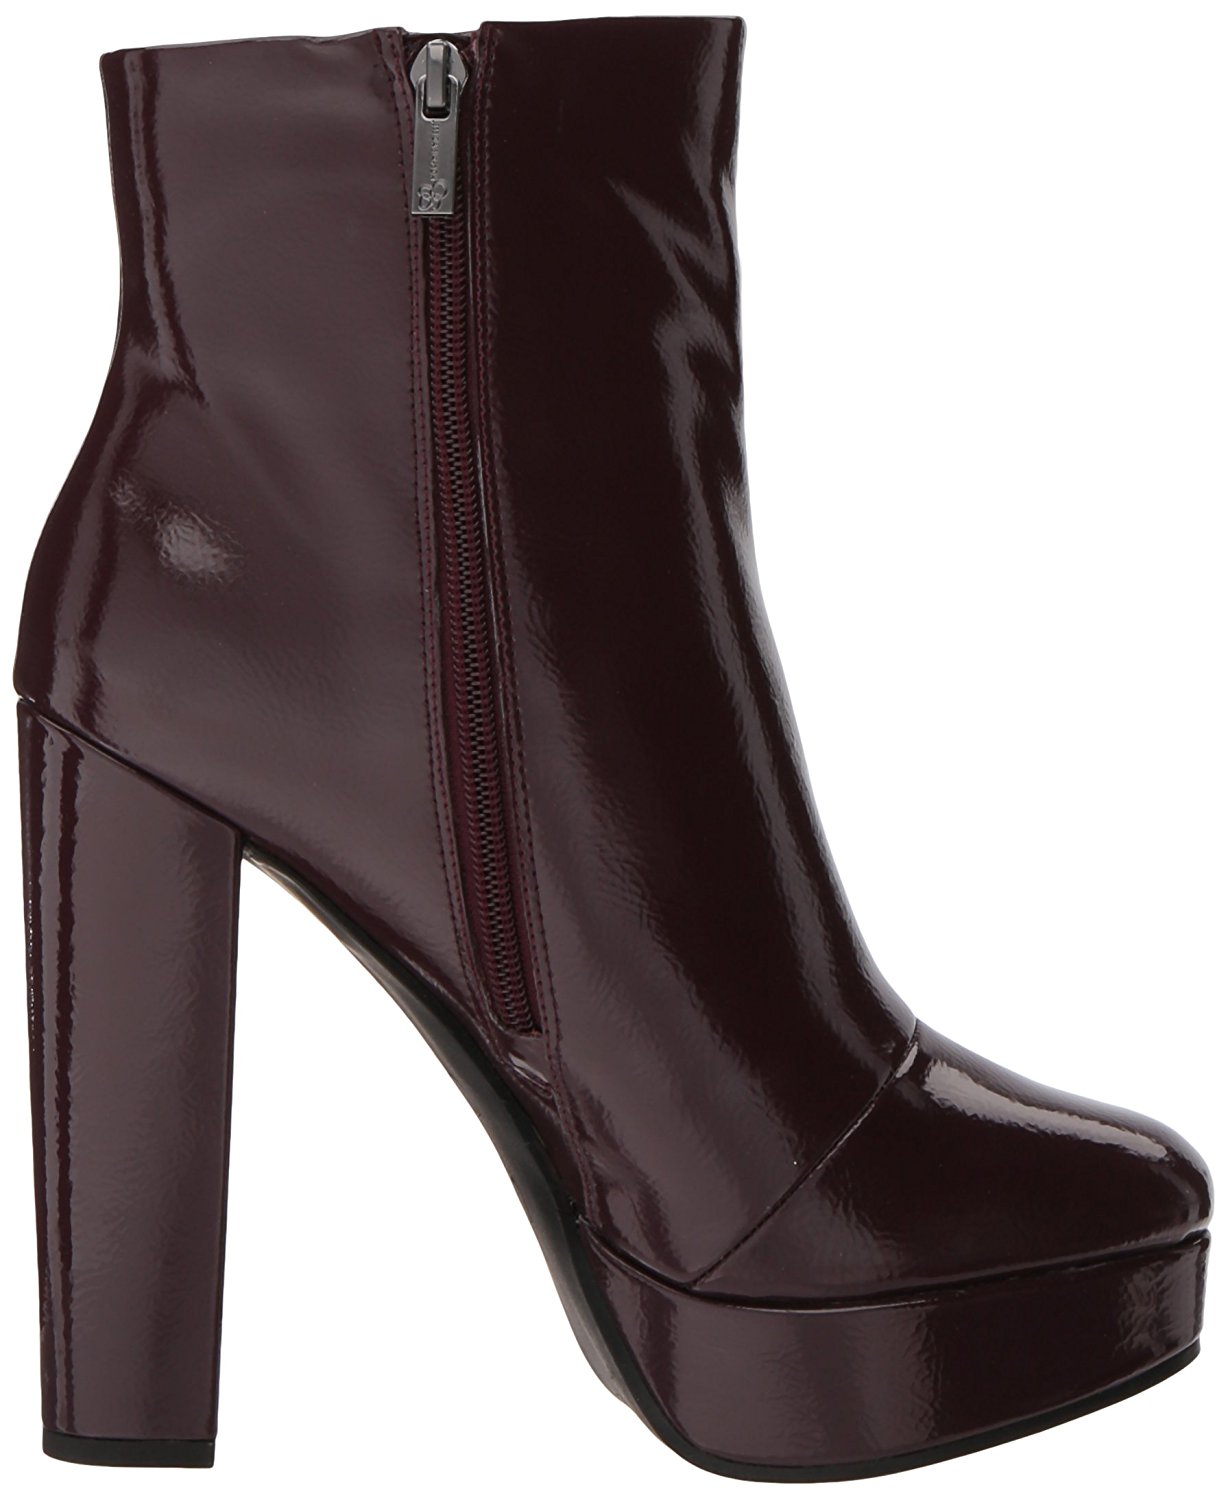 Jessica Simpson Womens Sebille Leather Square Toe Ankle Fashion Boots | eBay